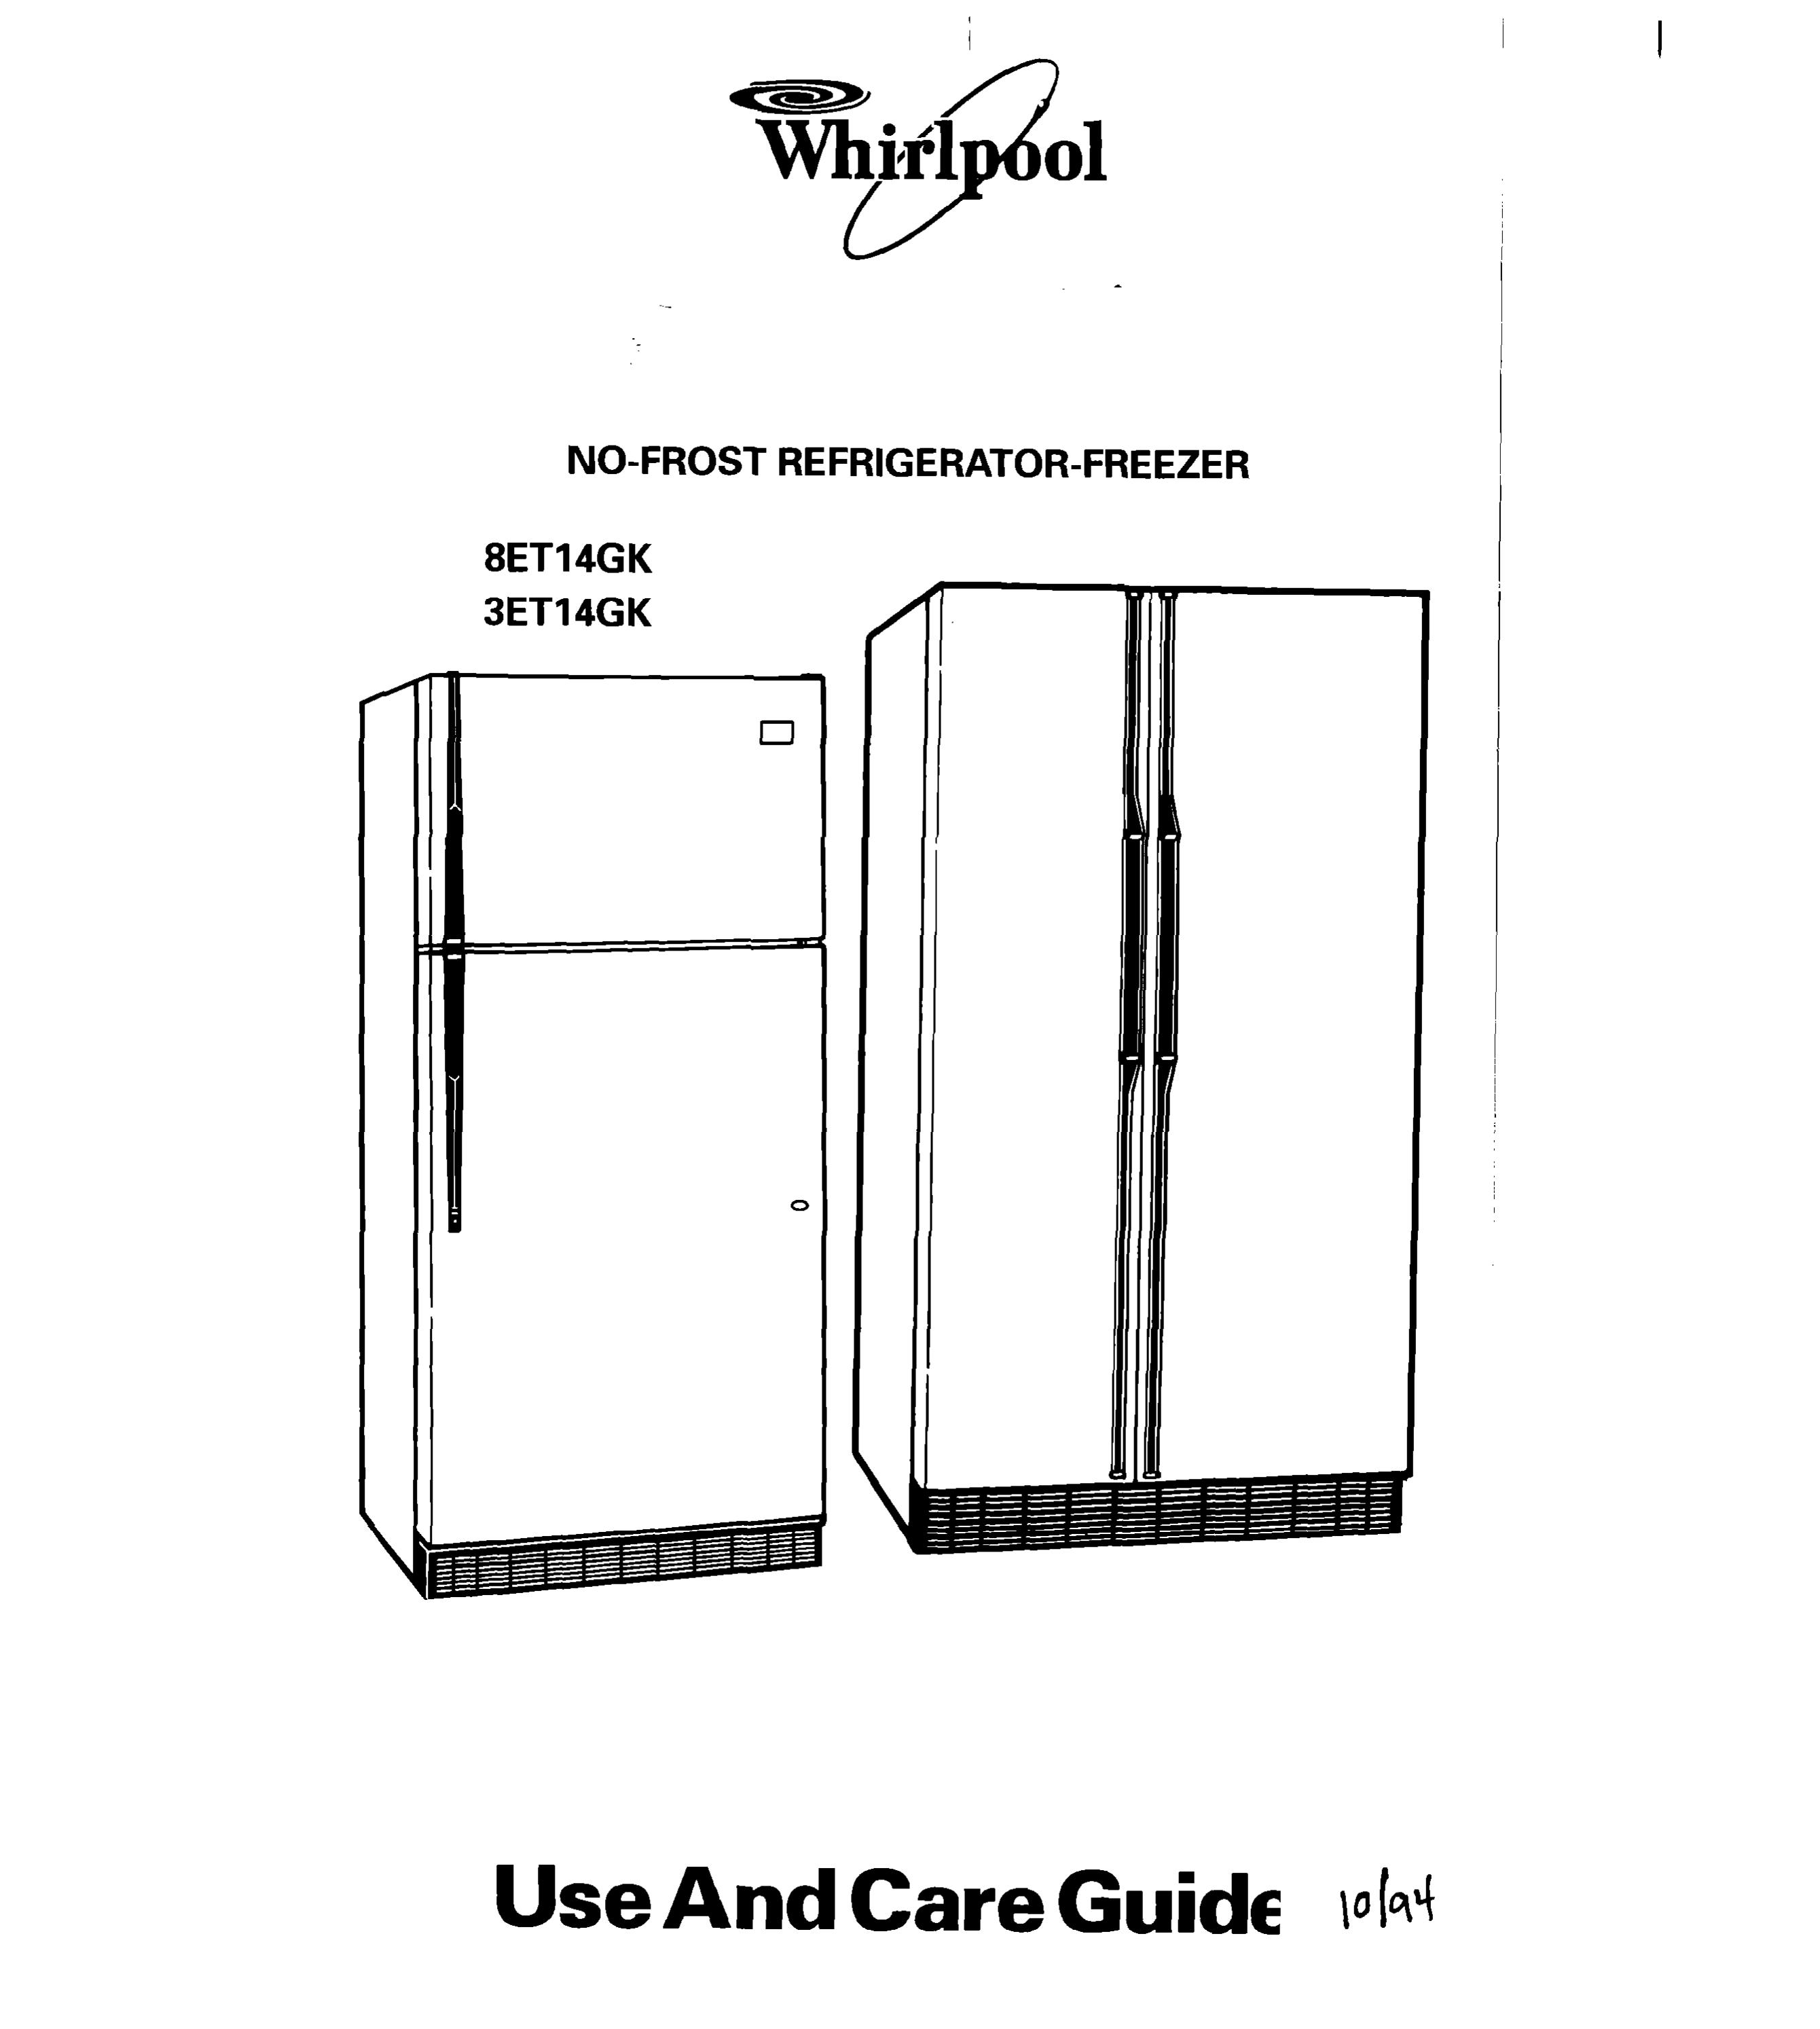 Whirlpool 3ET14GK Refrigerator User Manual